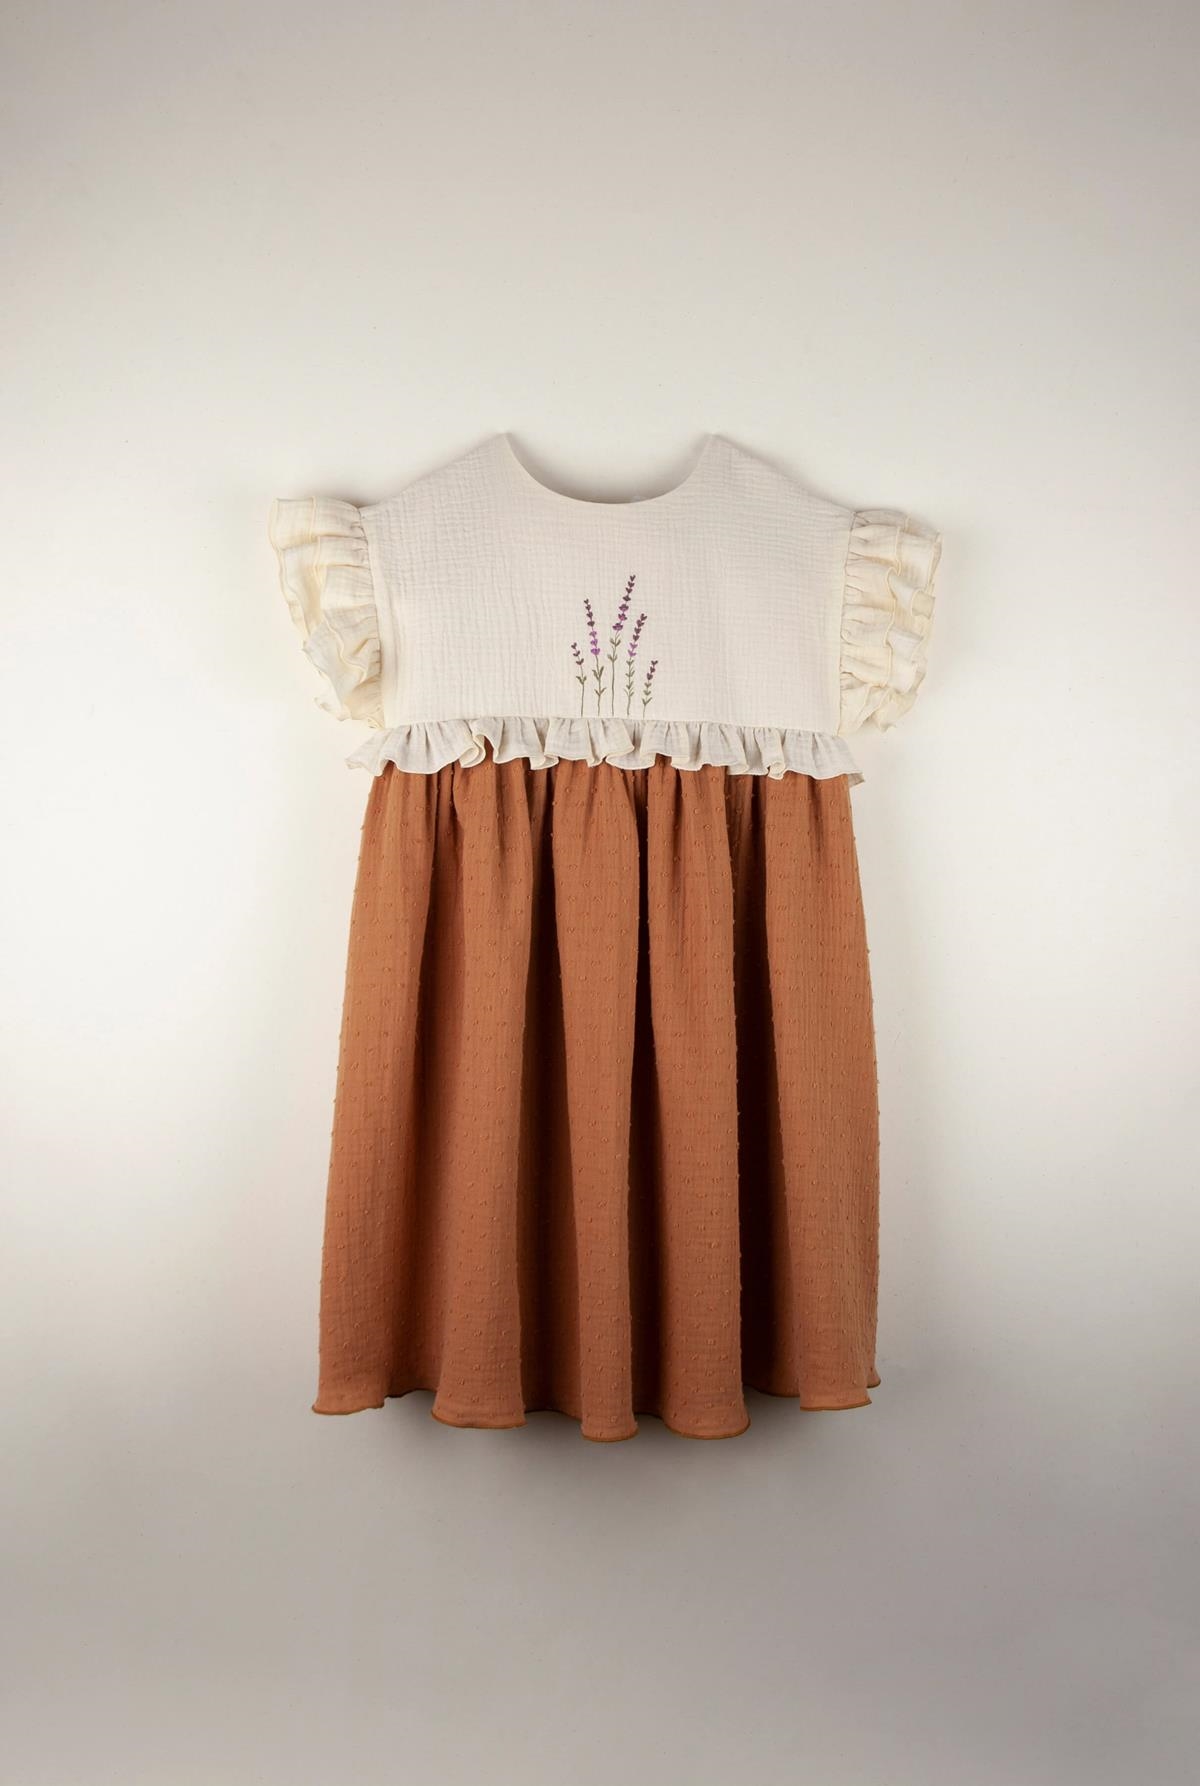 Mod.32.4 Terracotta organic dress with embroidered yoke | SS22 Mod.32.4 Terracotta organic dress with embroidered yoke | 1